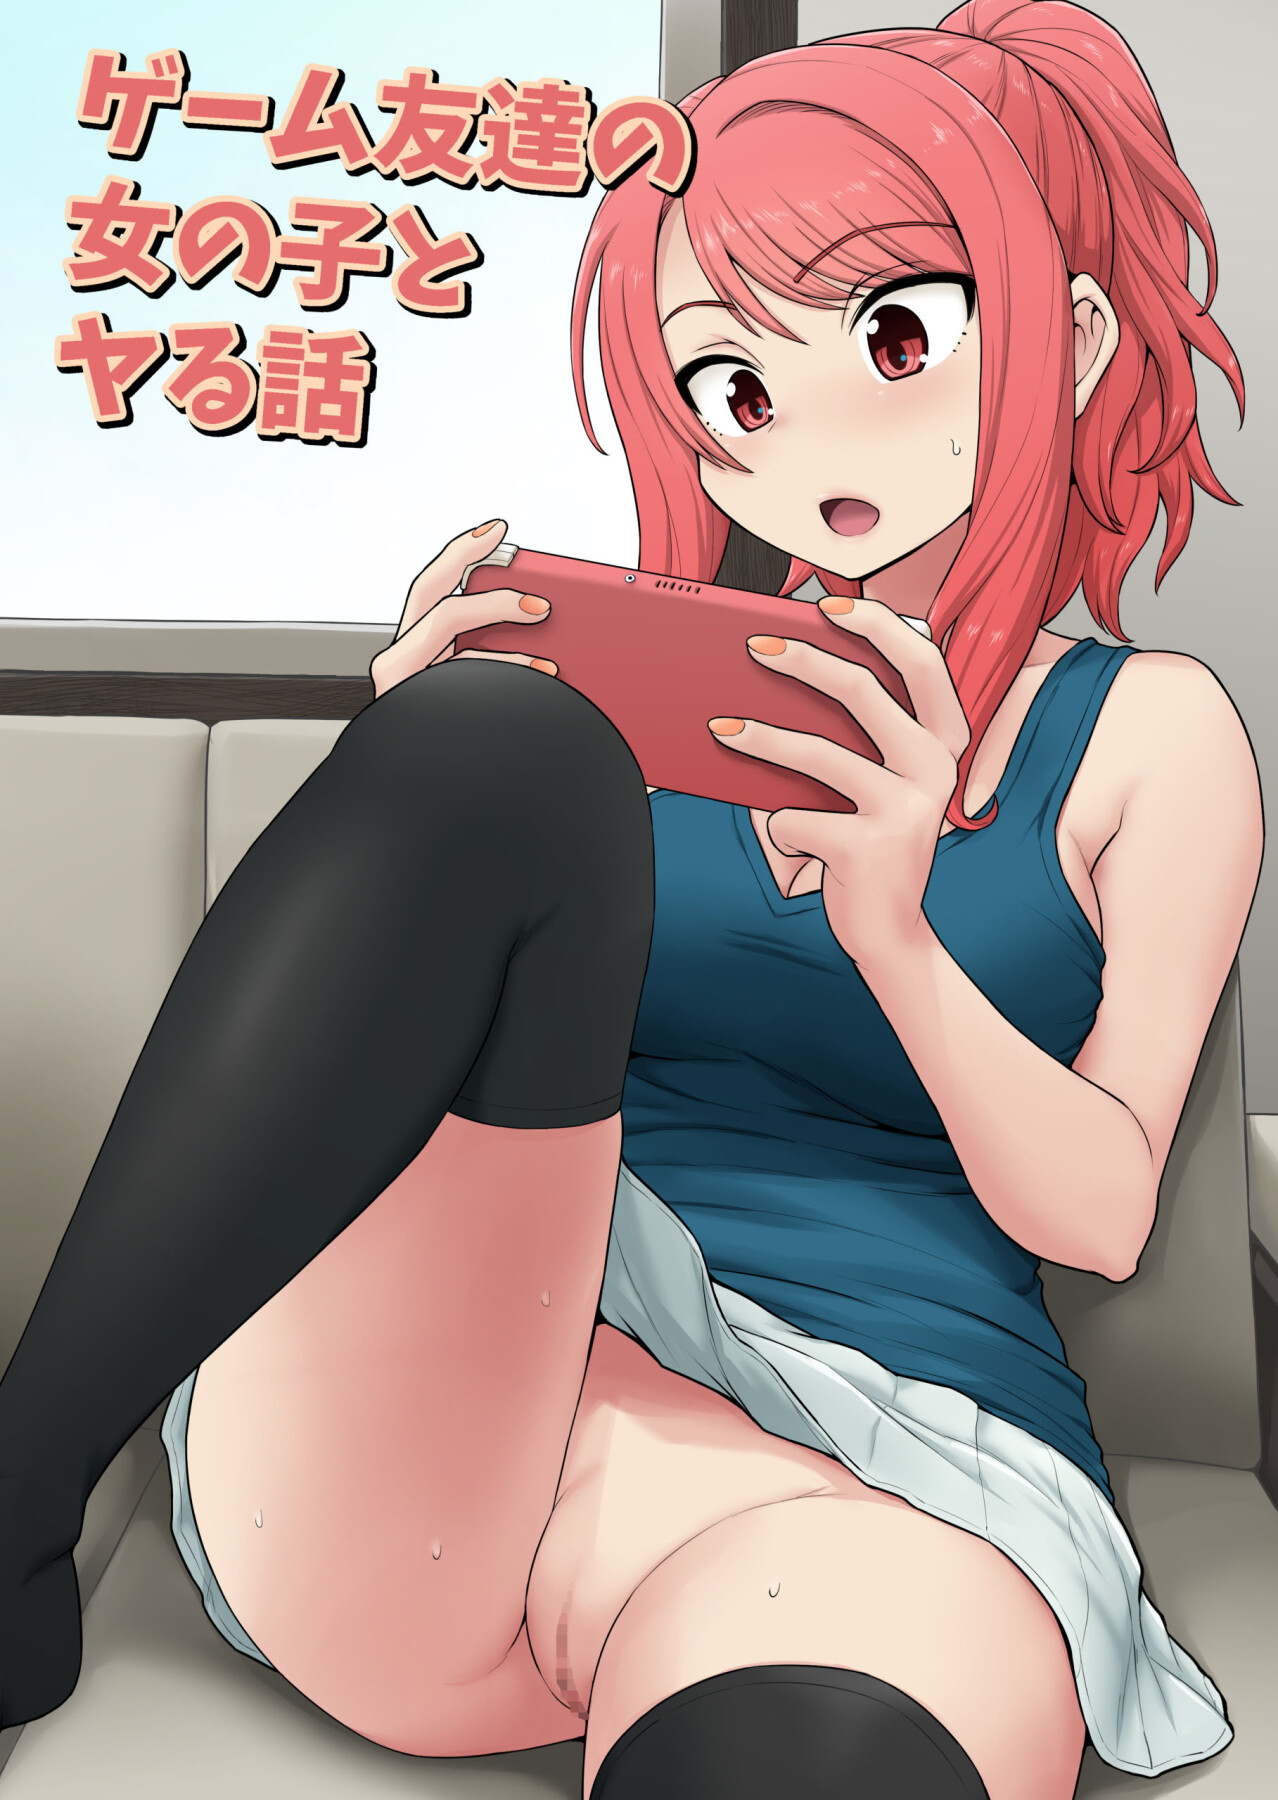 Hentai Manga Comic-Smashing With Your Gamer Girl Friend-Read-1